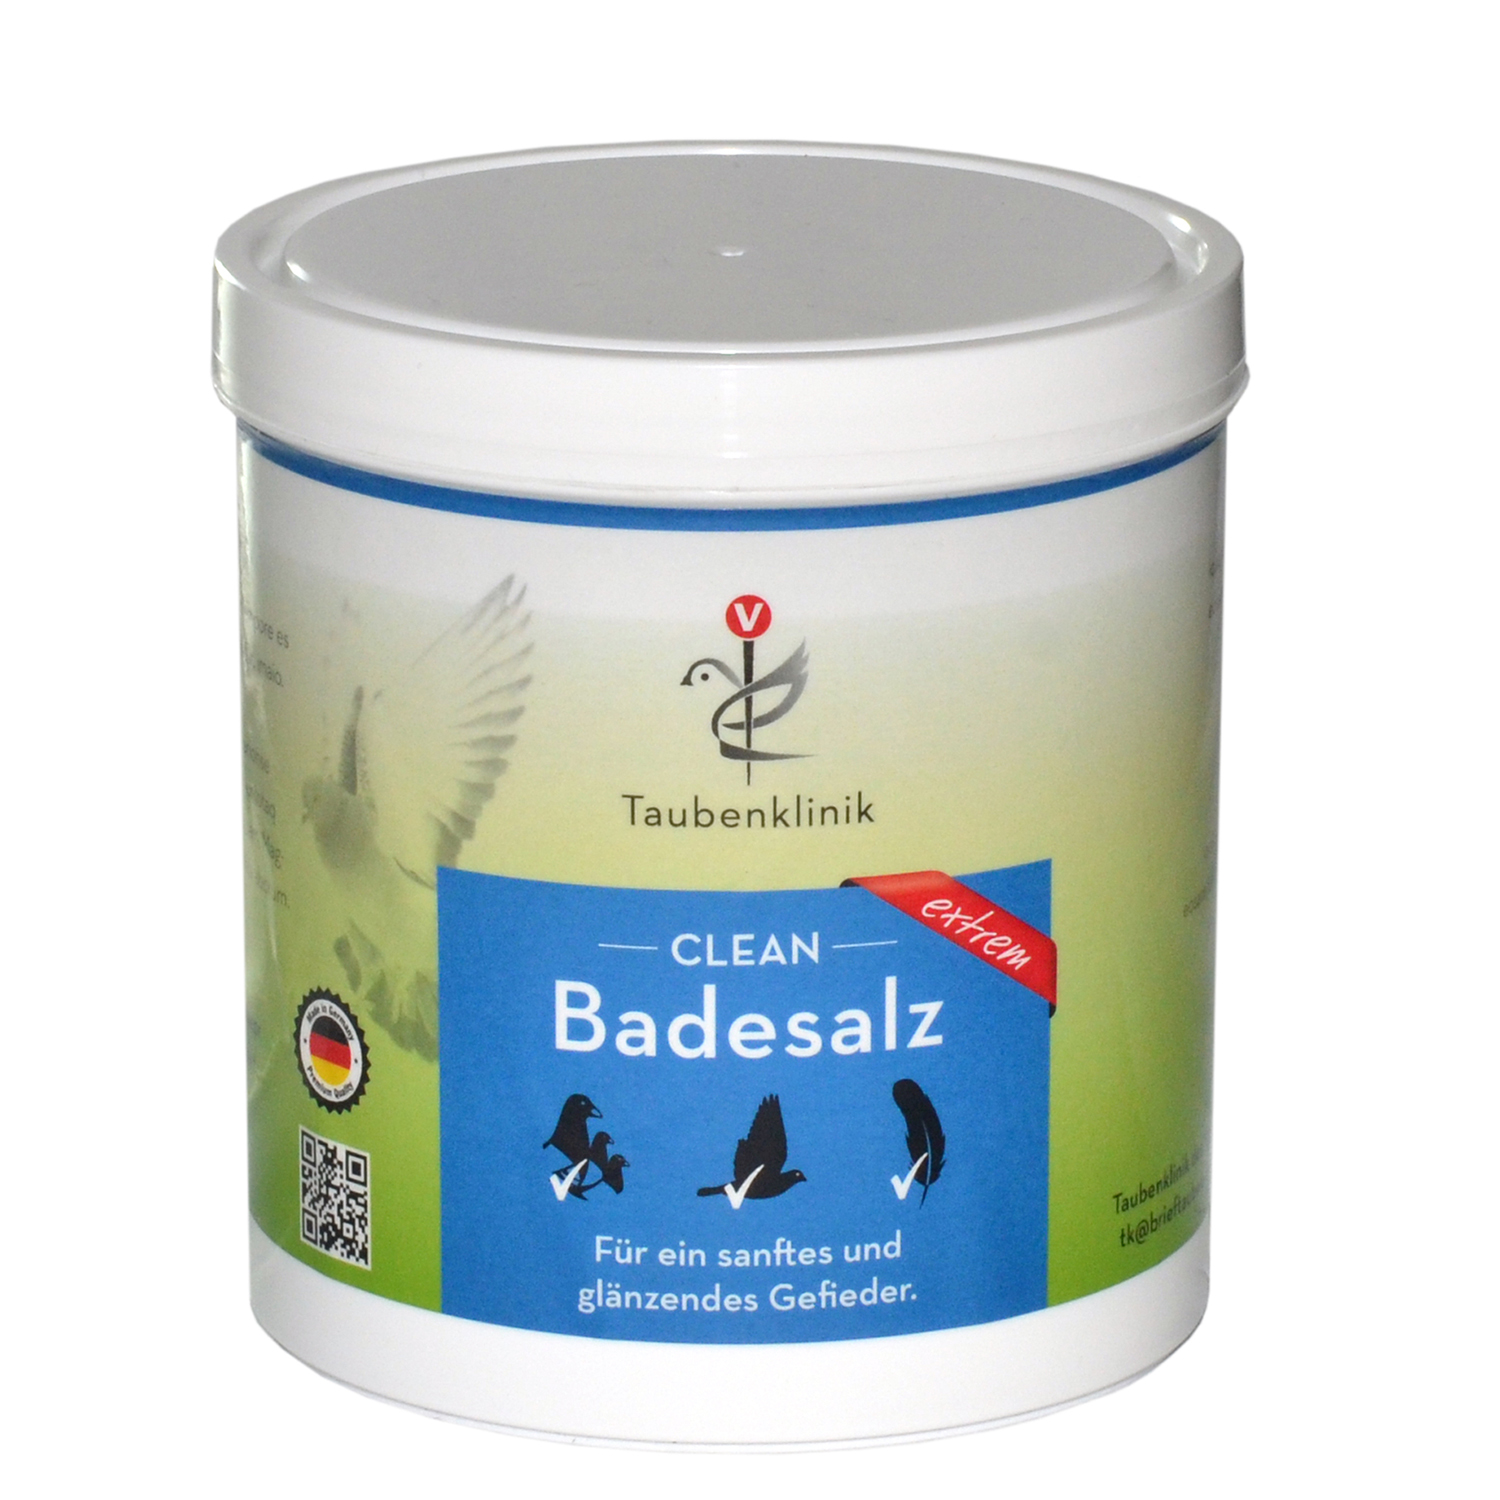 CLEAN Badesalz 750 g